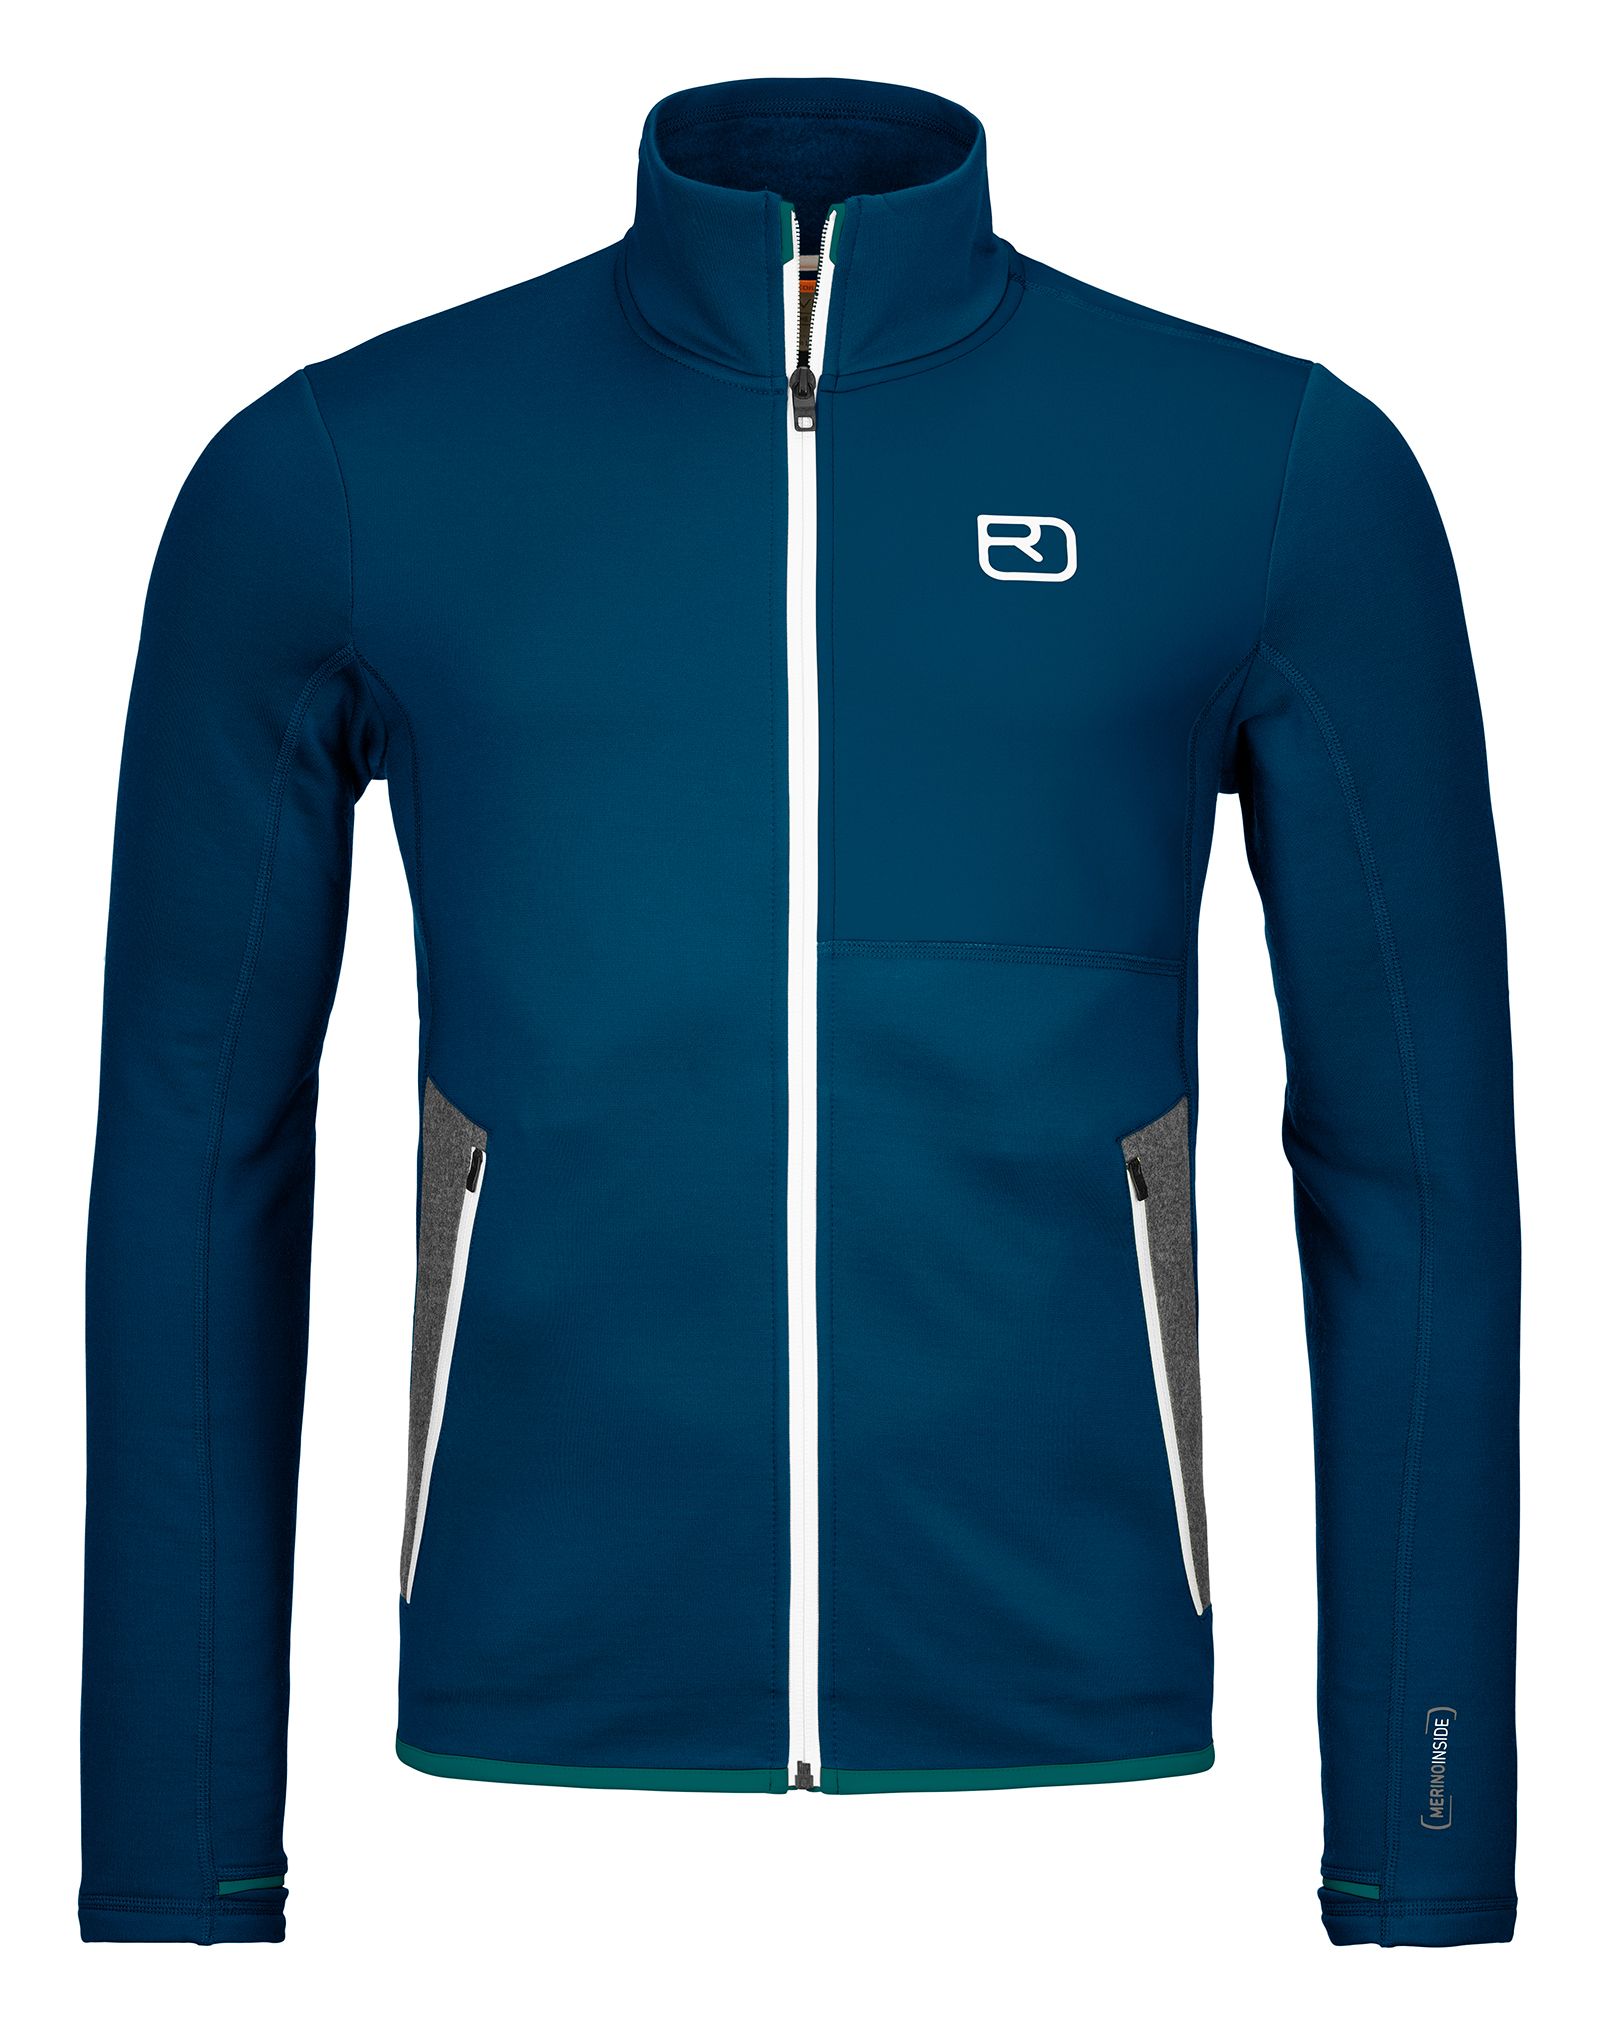 Polaire Fleece Jacket Men - Petrol blue